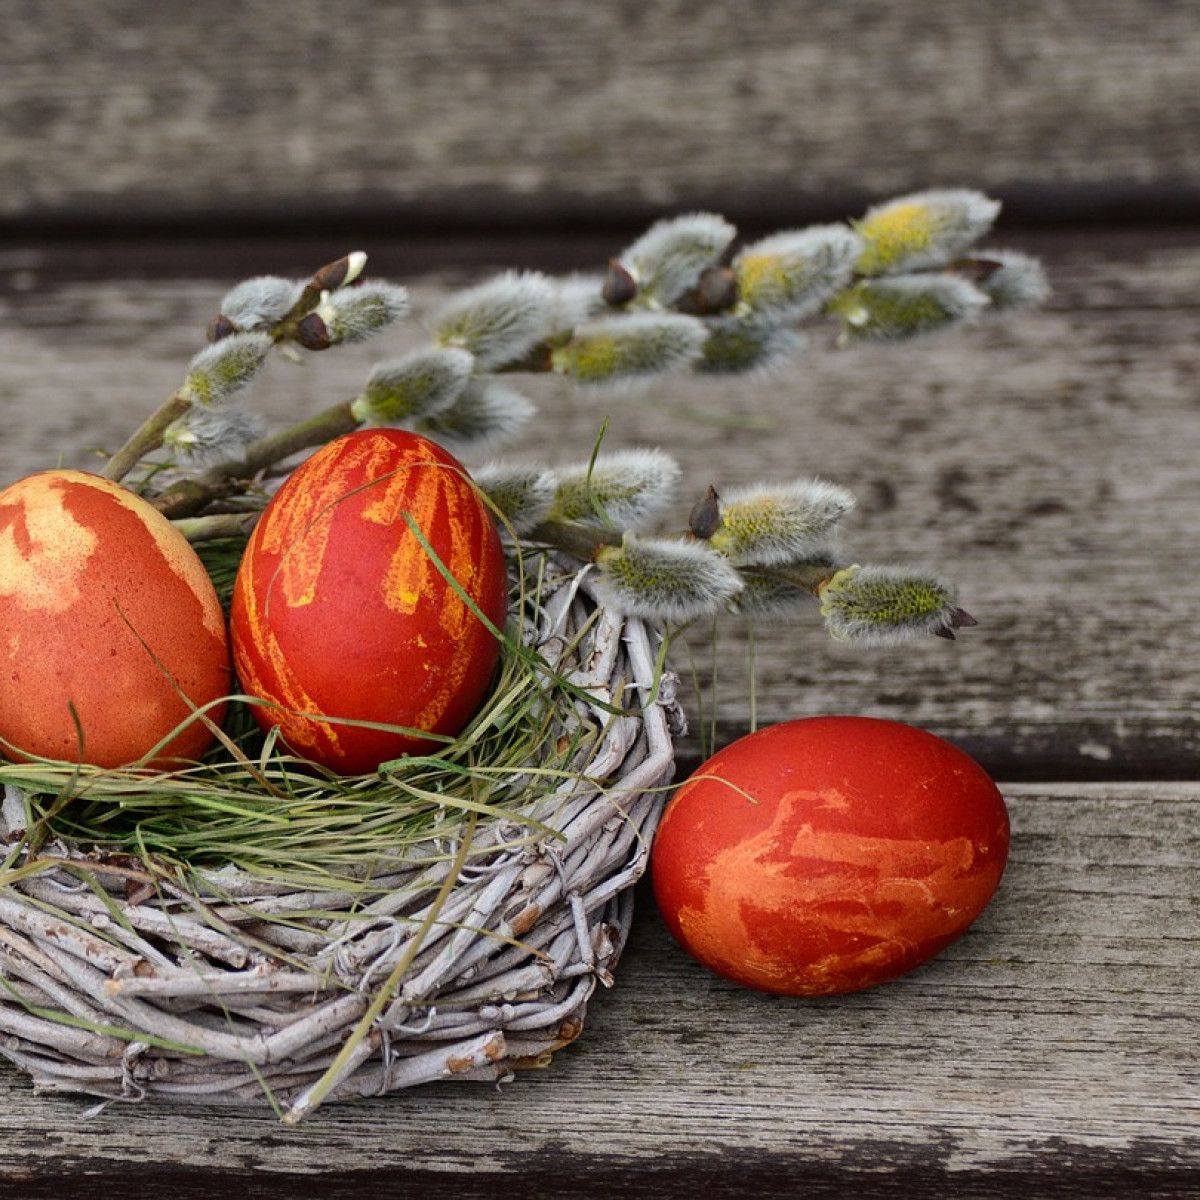 5 Fabergé Easter eggs that have made history | Shira Ghaffari